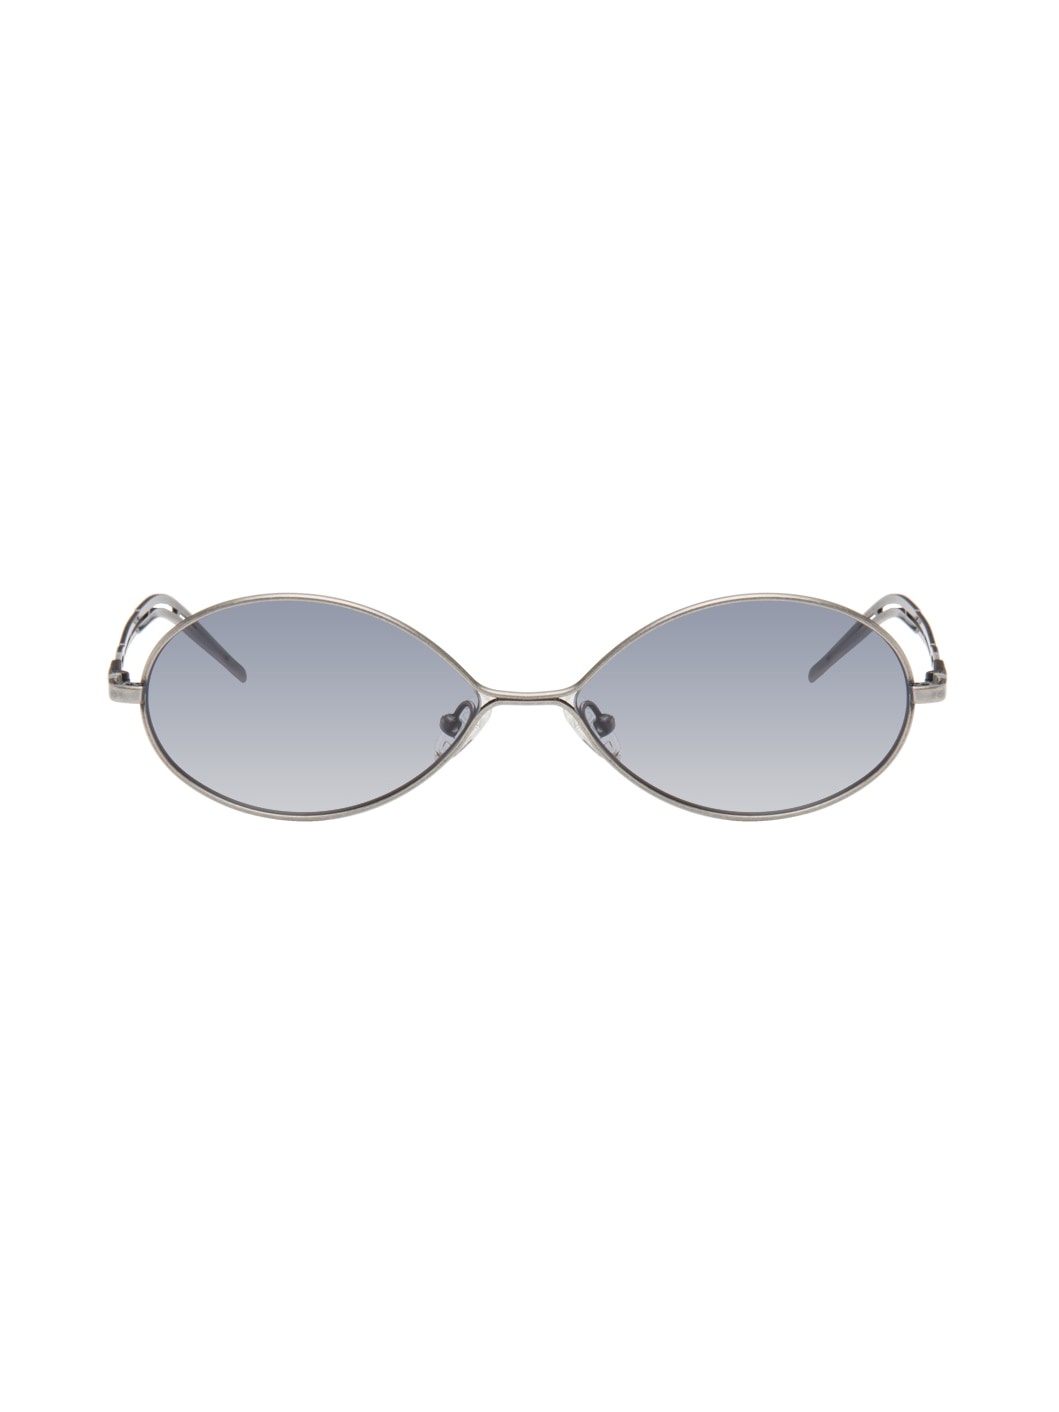 SSENSE Exclusive Silver 'The Teardrop' Sunglasses - 1